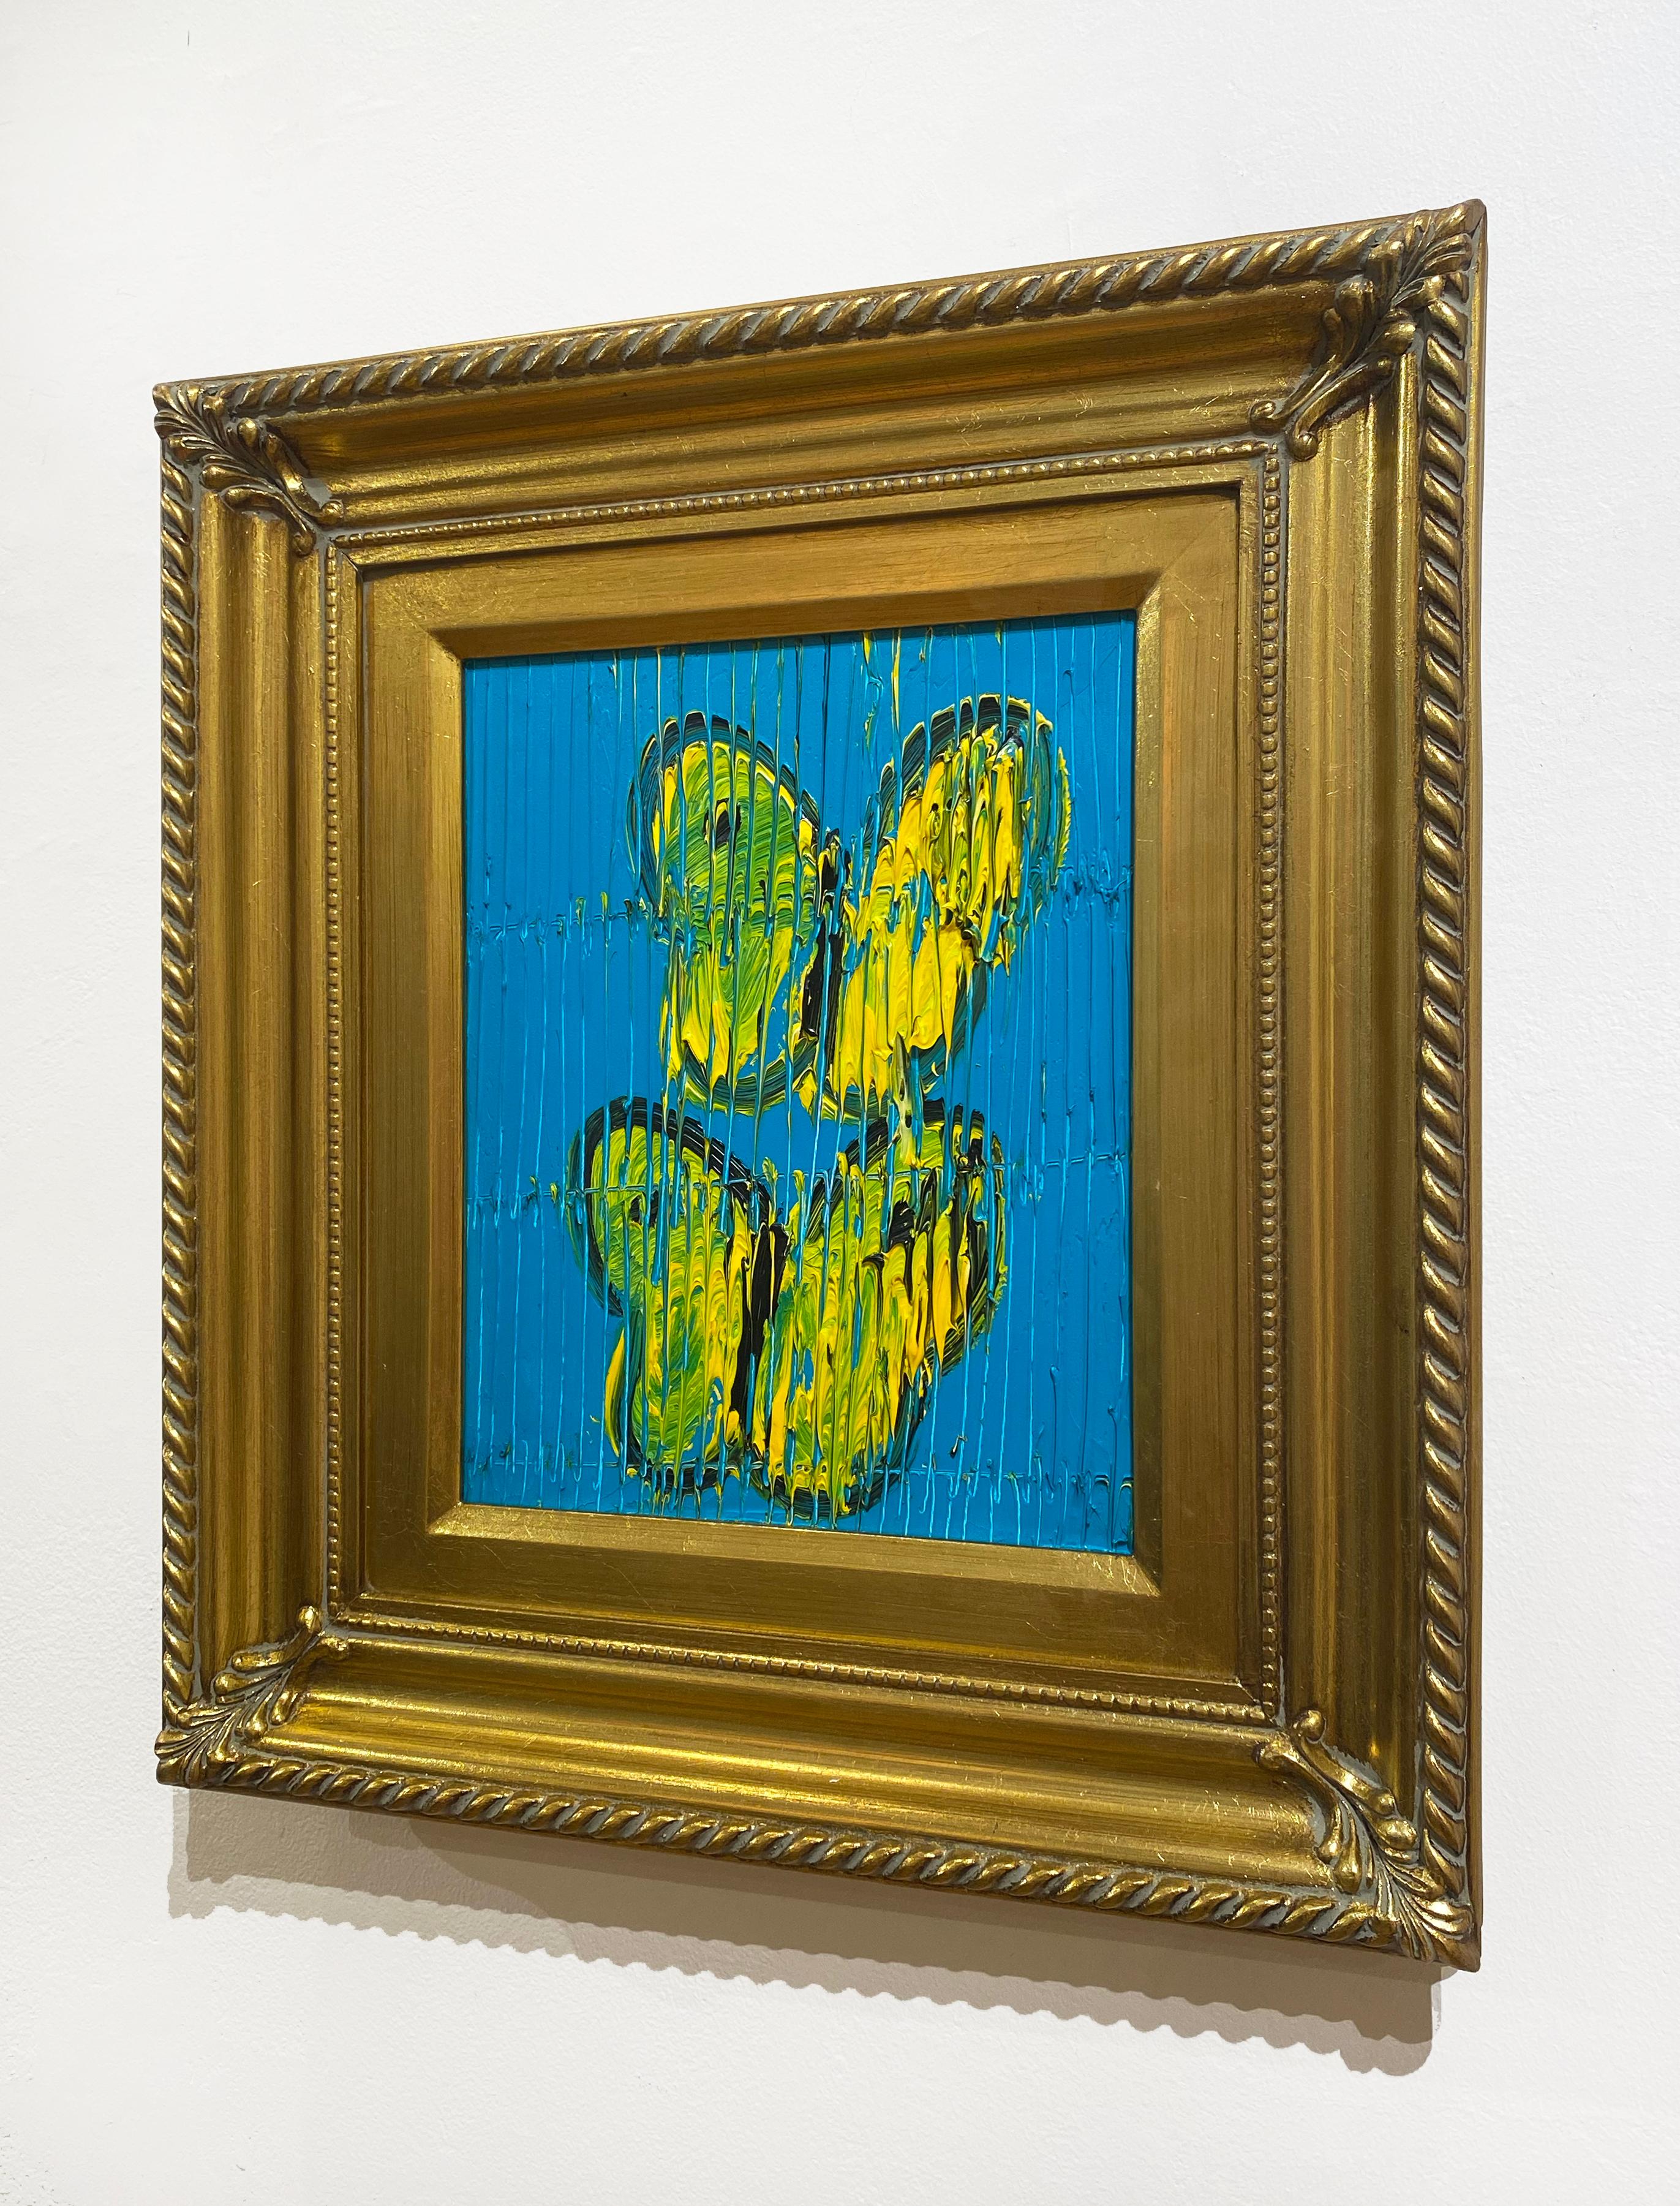 Artist:  Slonem, Hunt
Title:  Yellow Nape
Series: Butterflies
Date:  2023
Medium:  Oil on Wood
Unframed Dimensions:  10